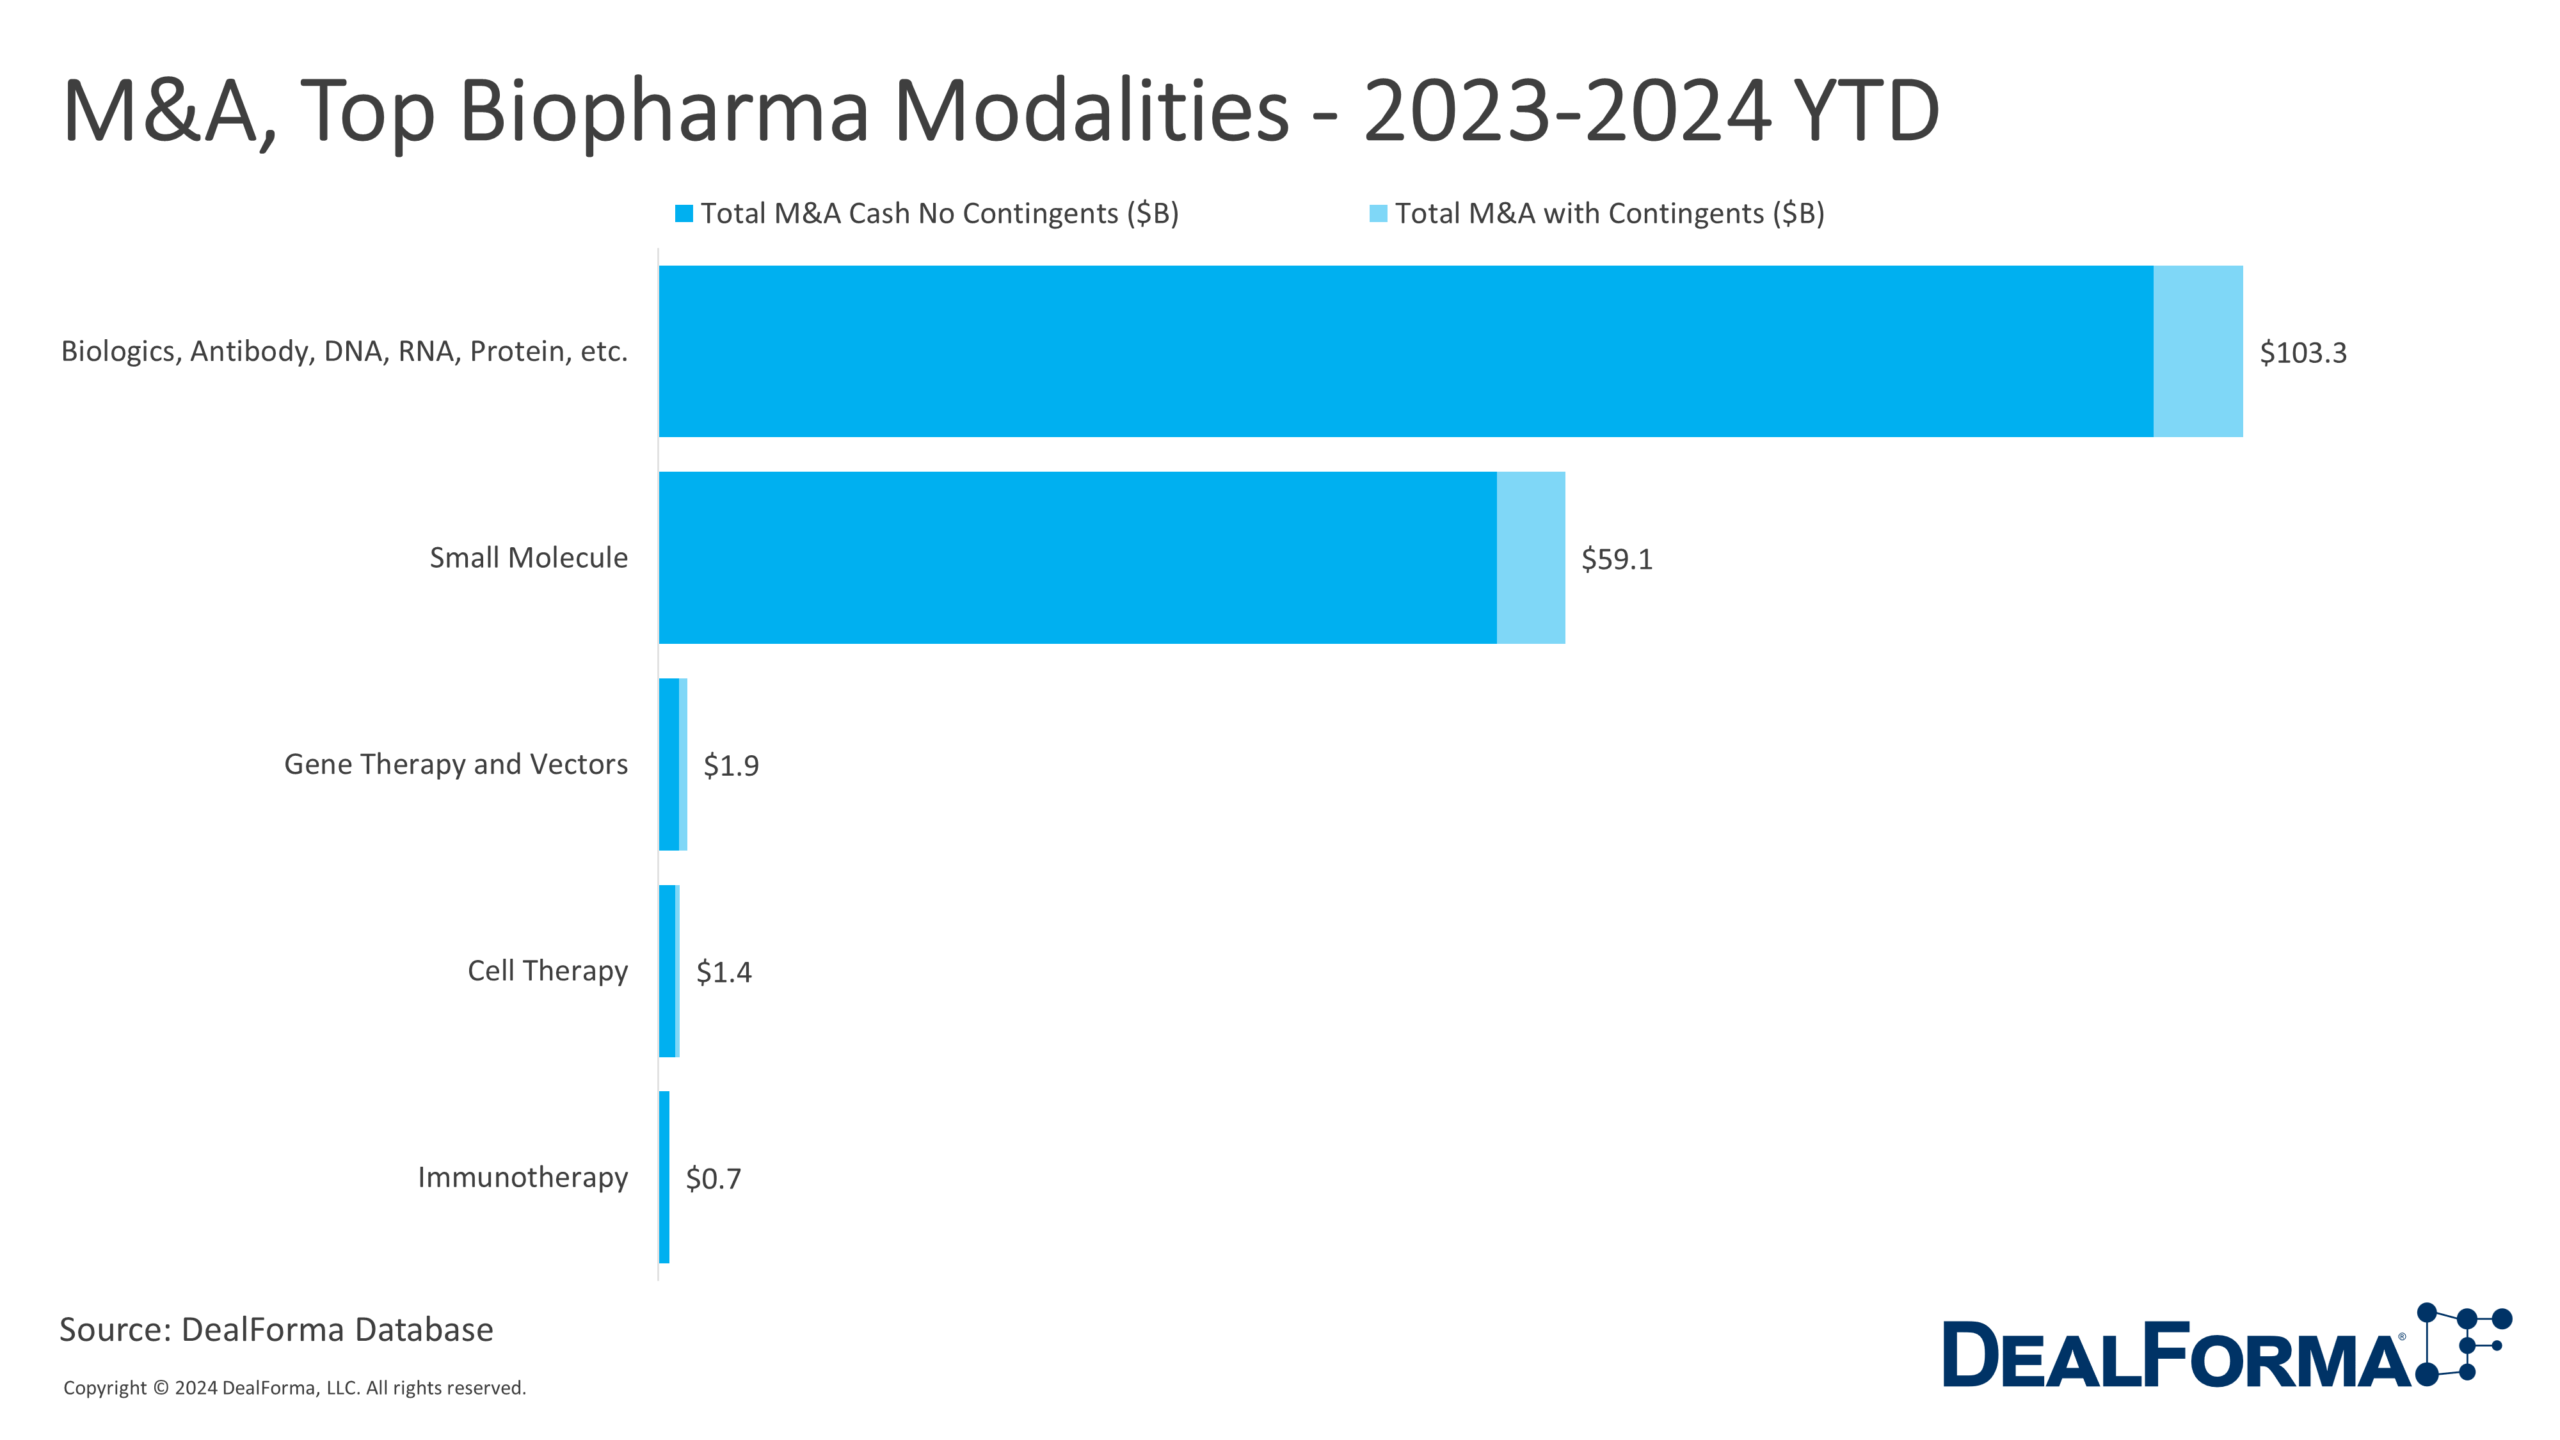 M&A, Top Biopharma Modalities - 2023-2024 YTD